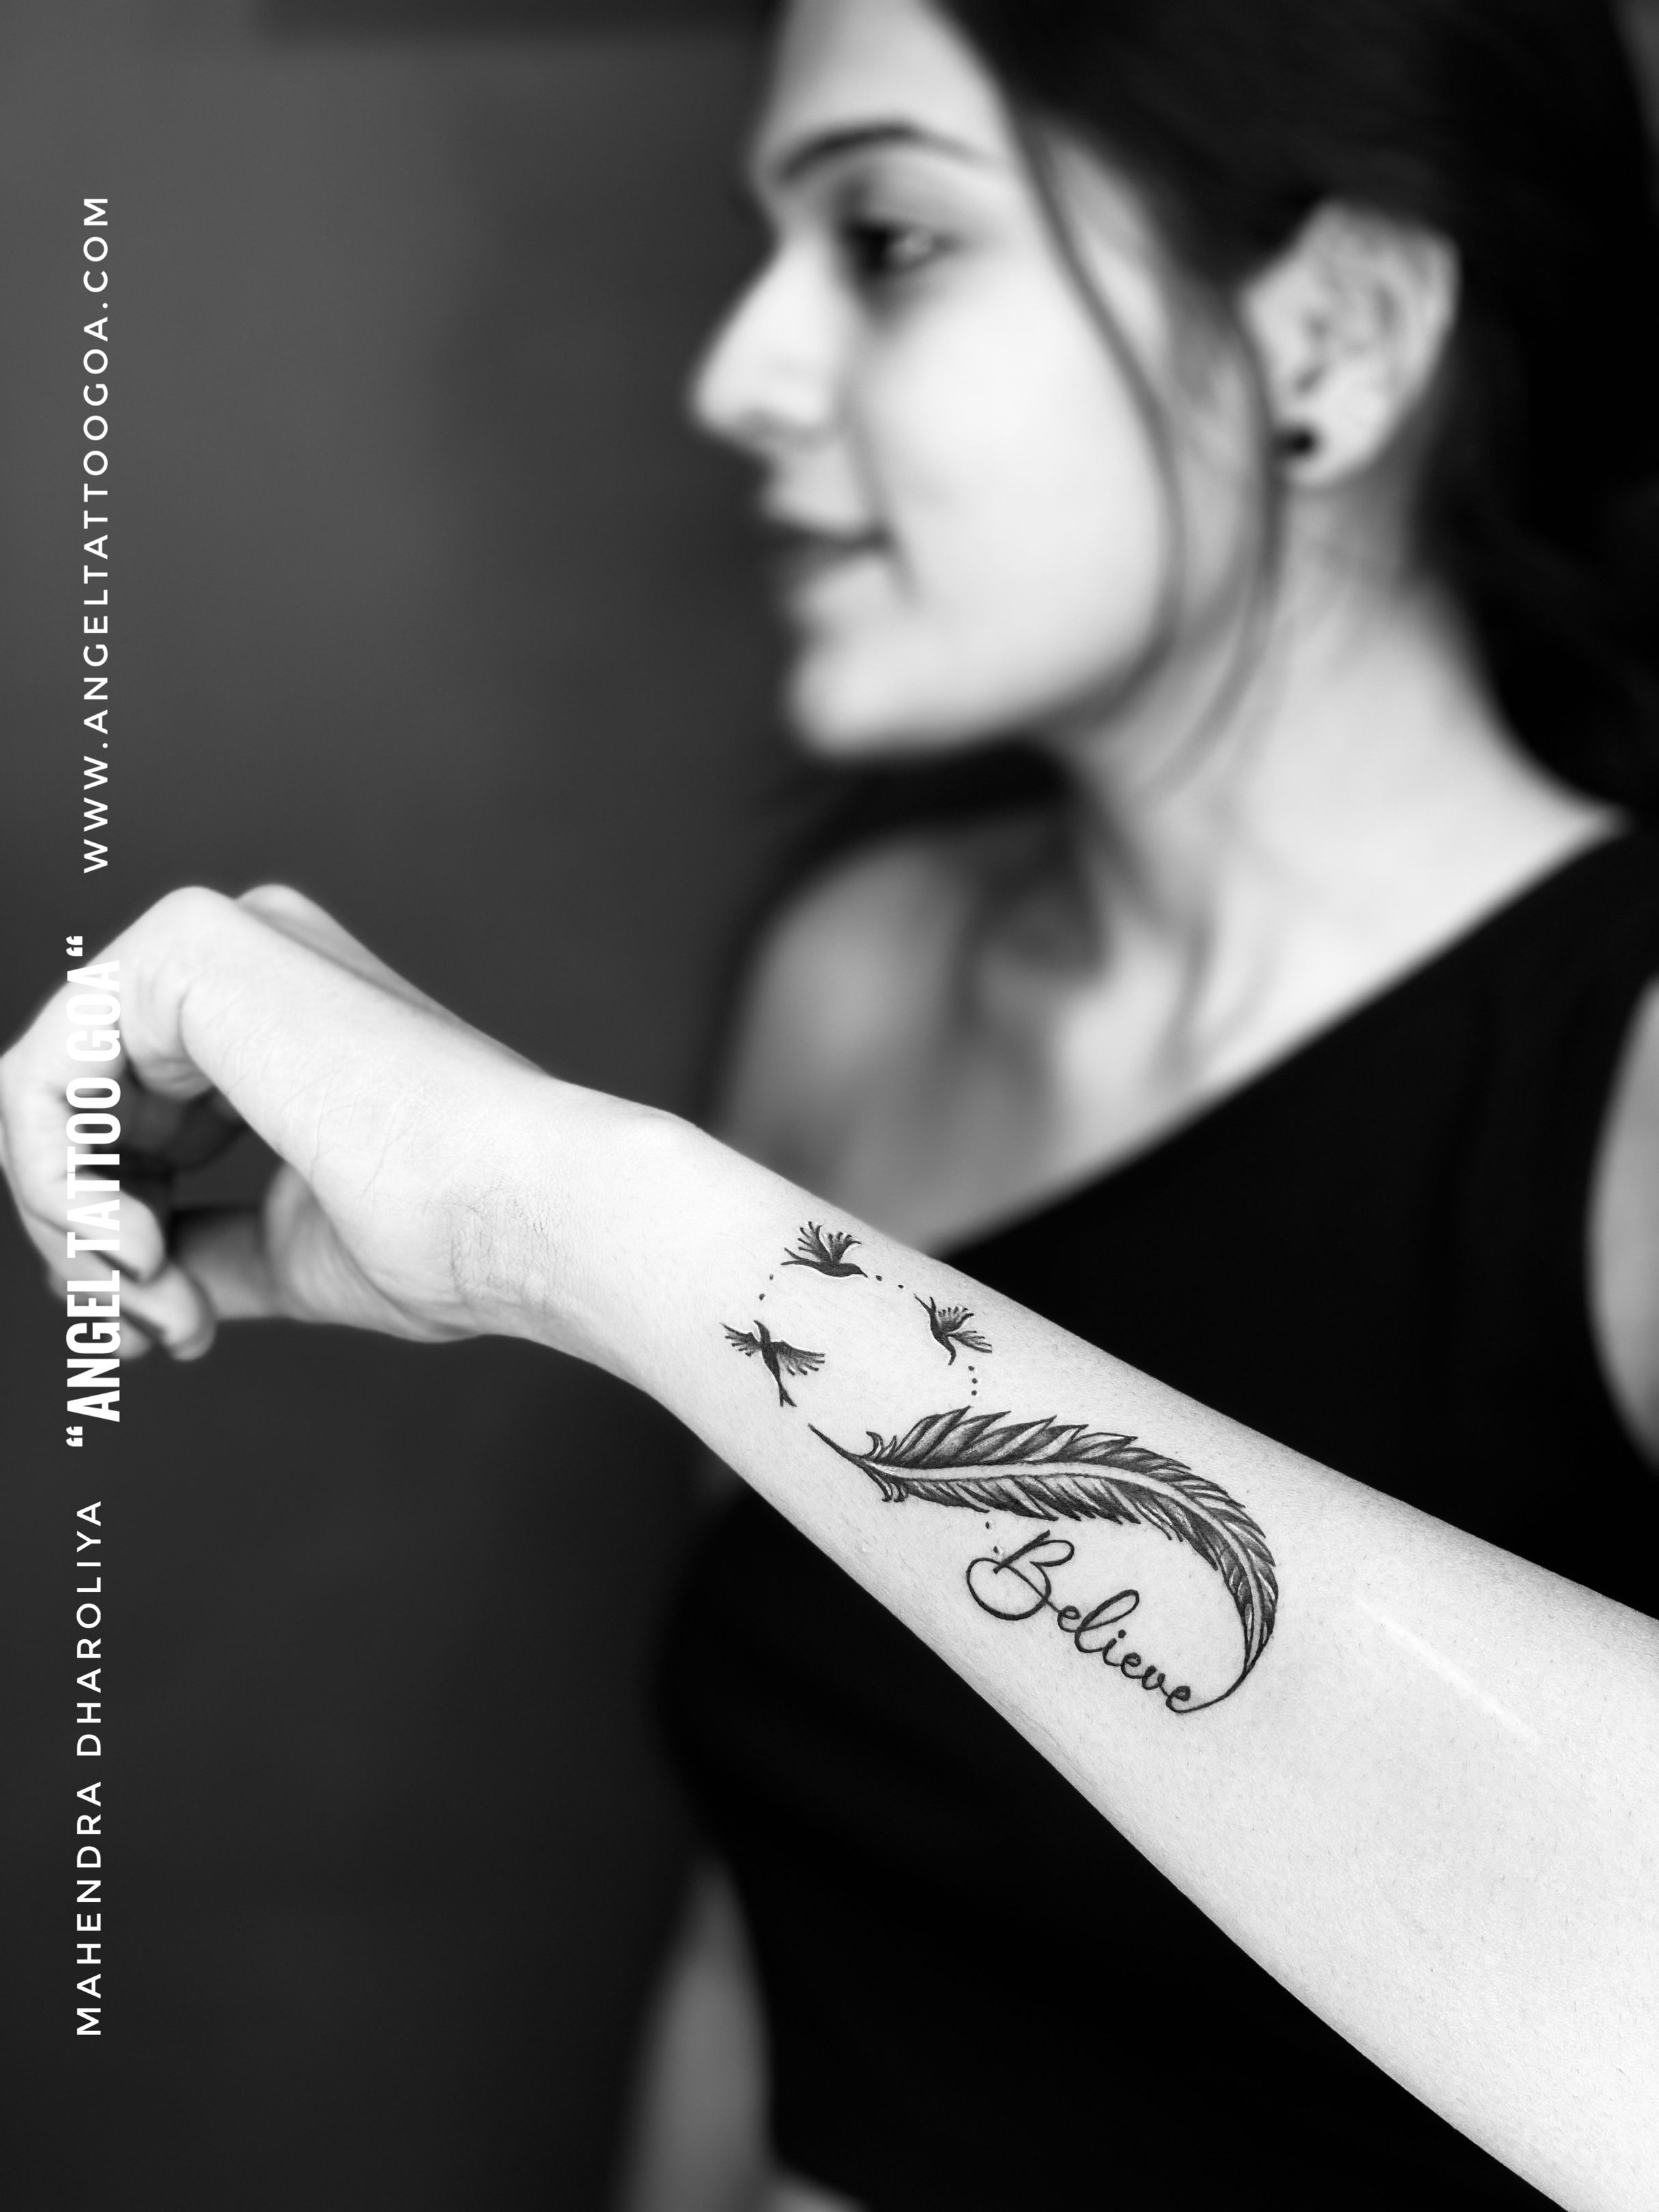 believe tattoos on wrist for girls